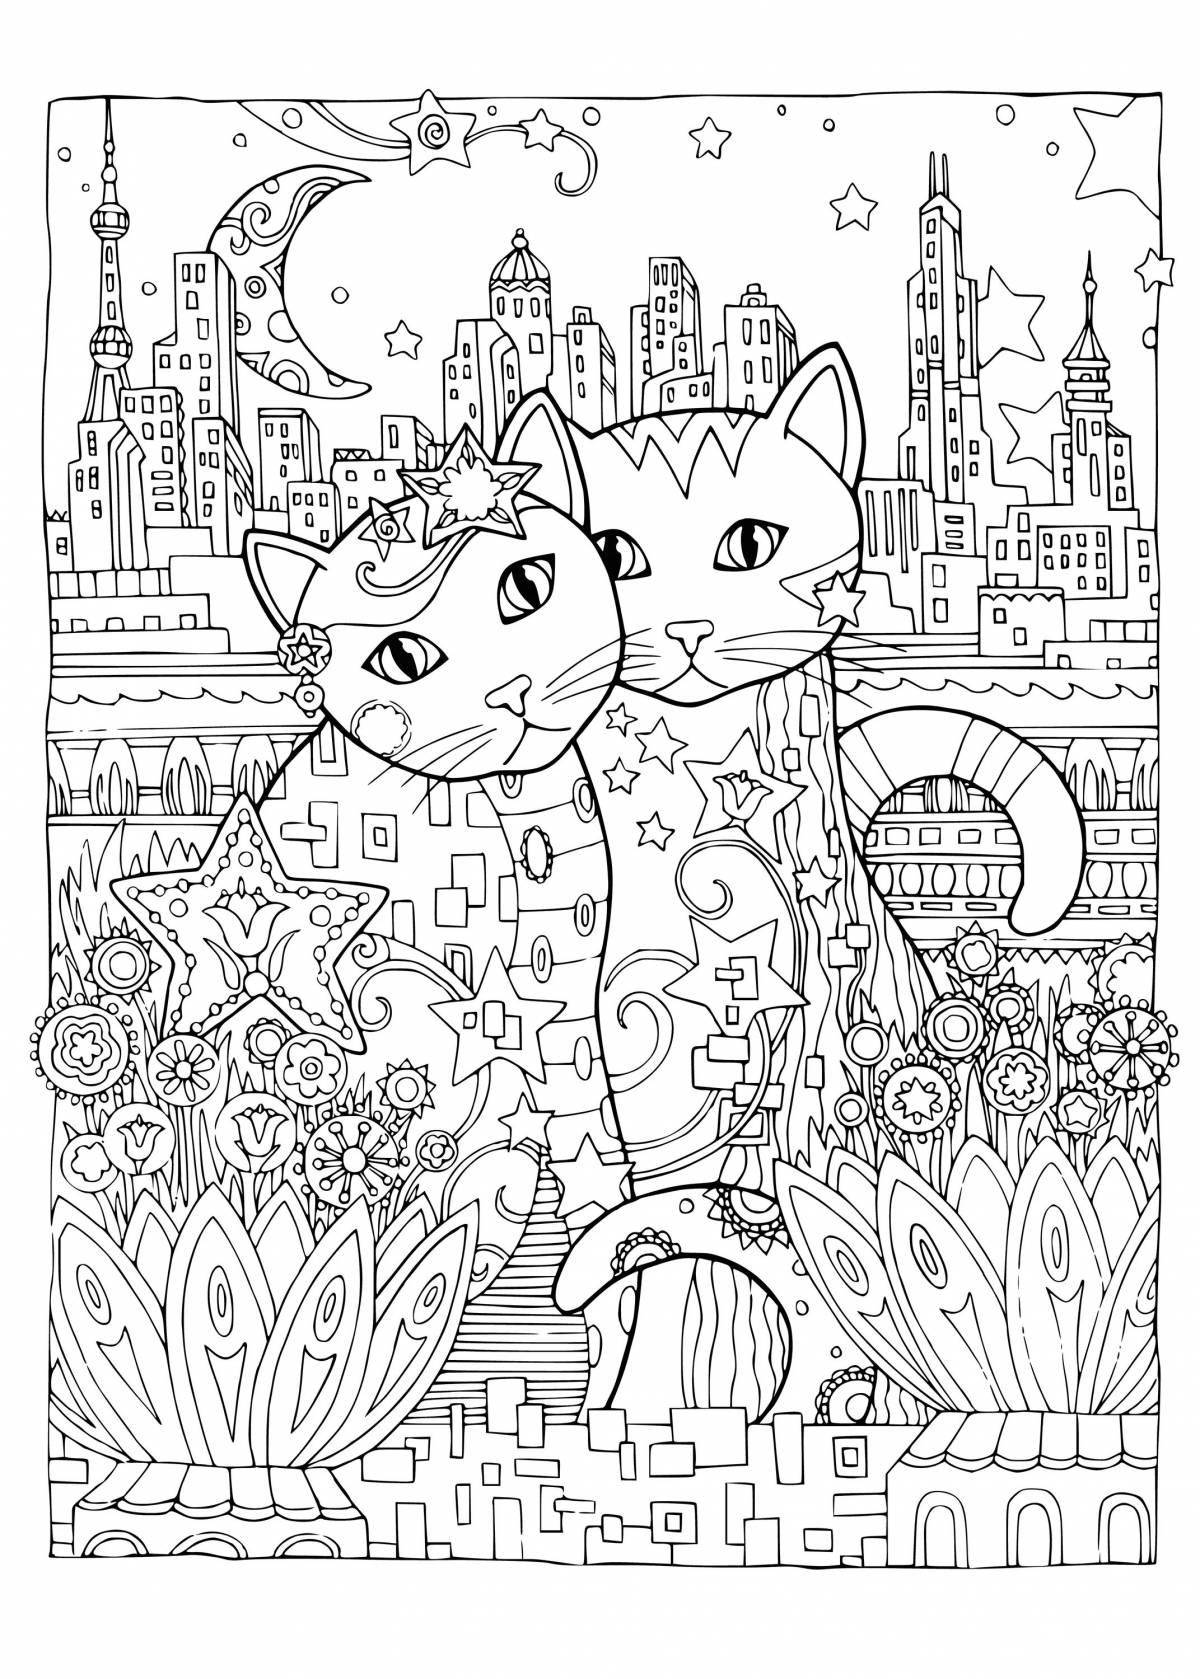 Live Kazan cat coloring